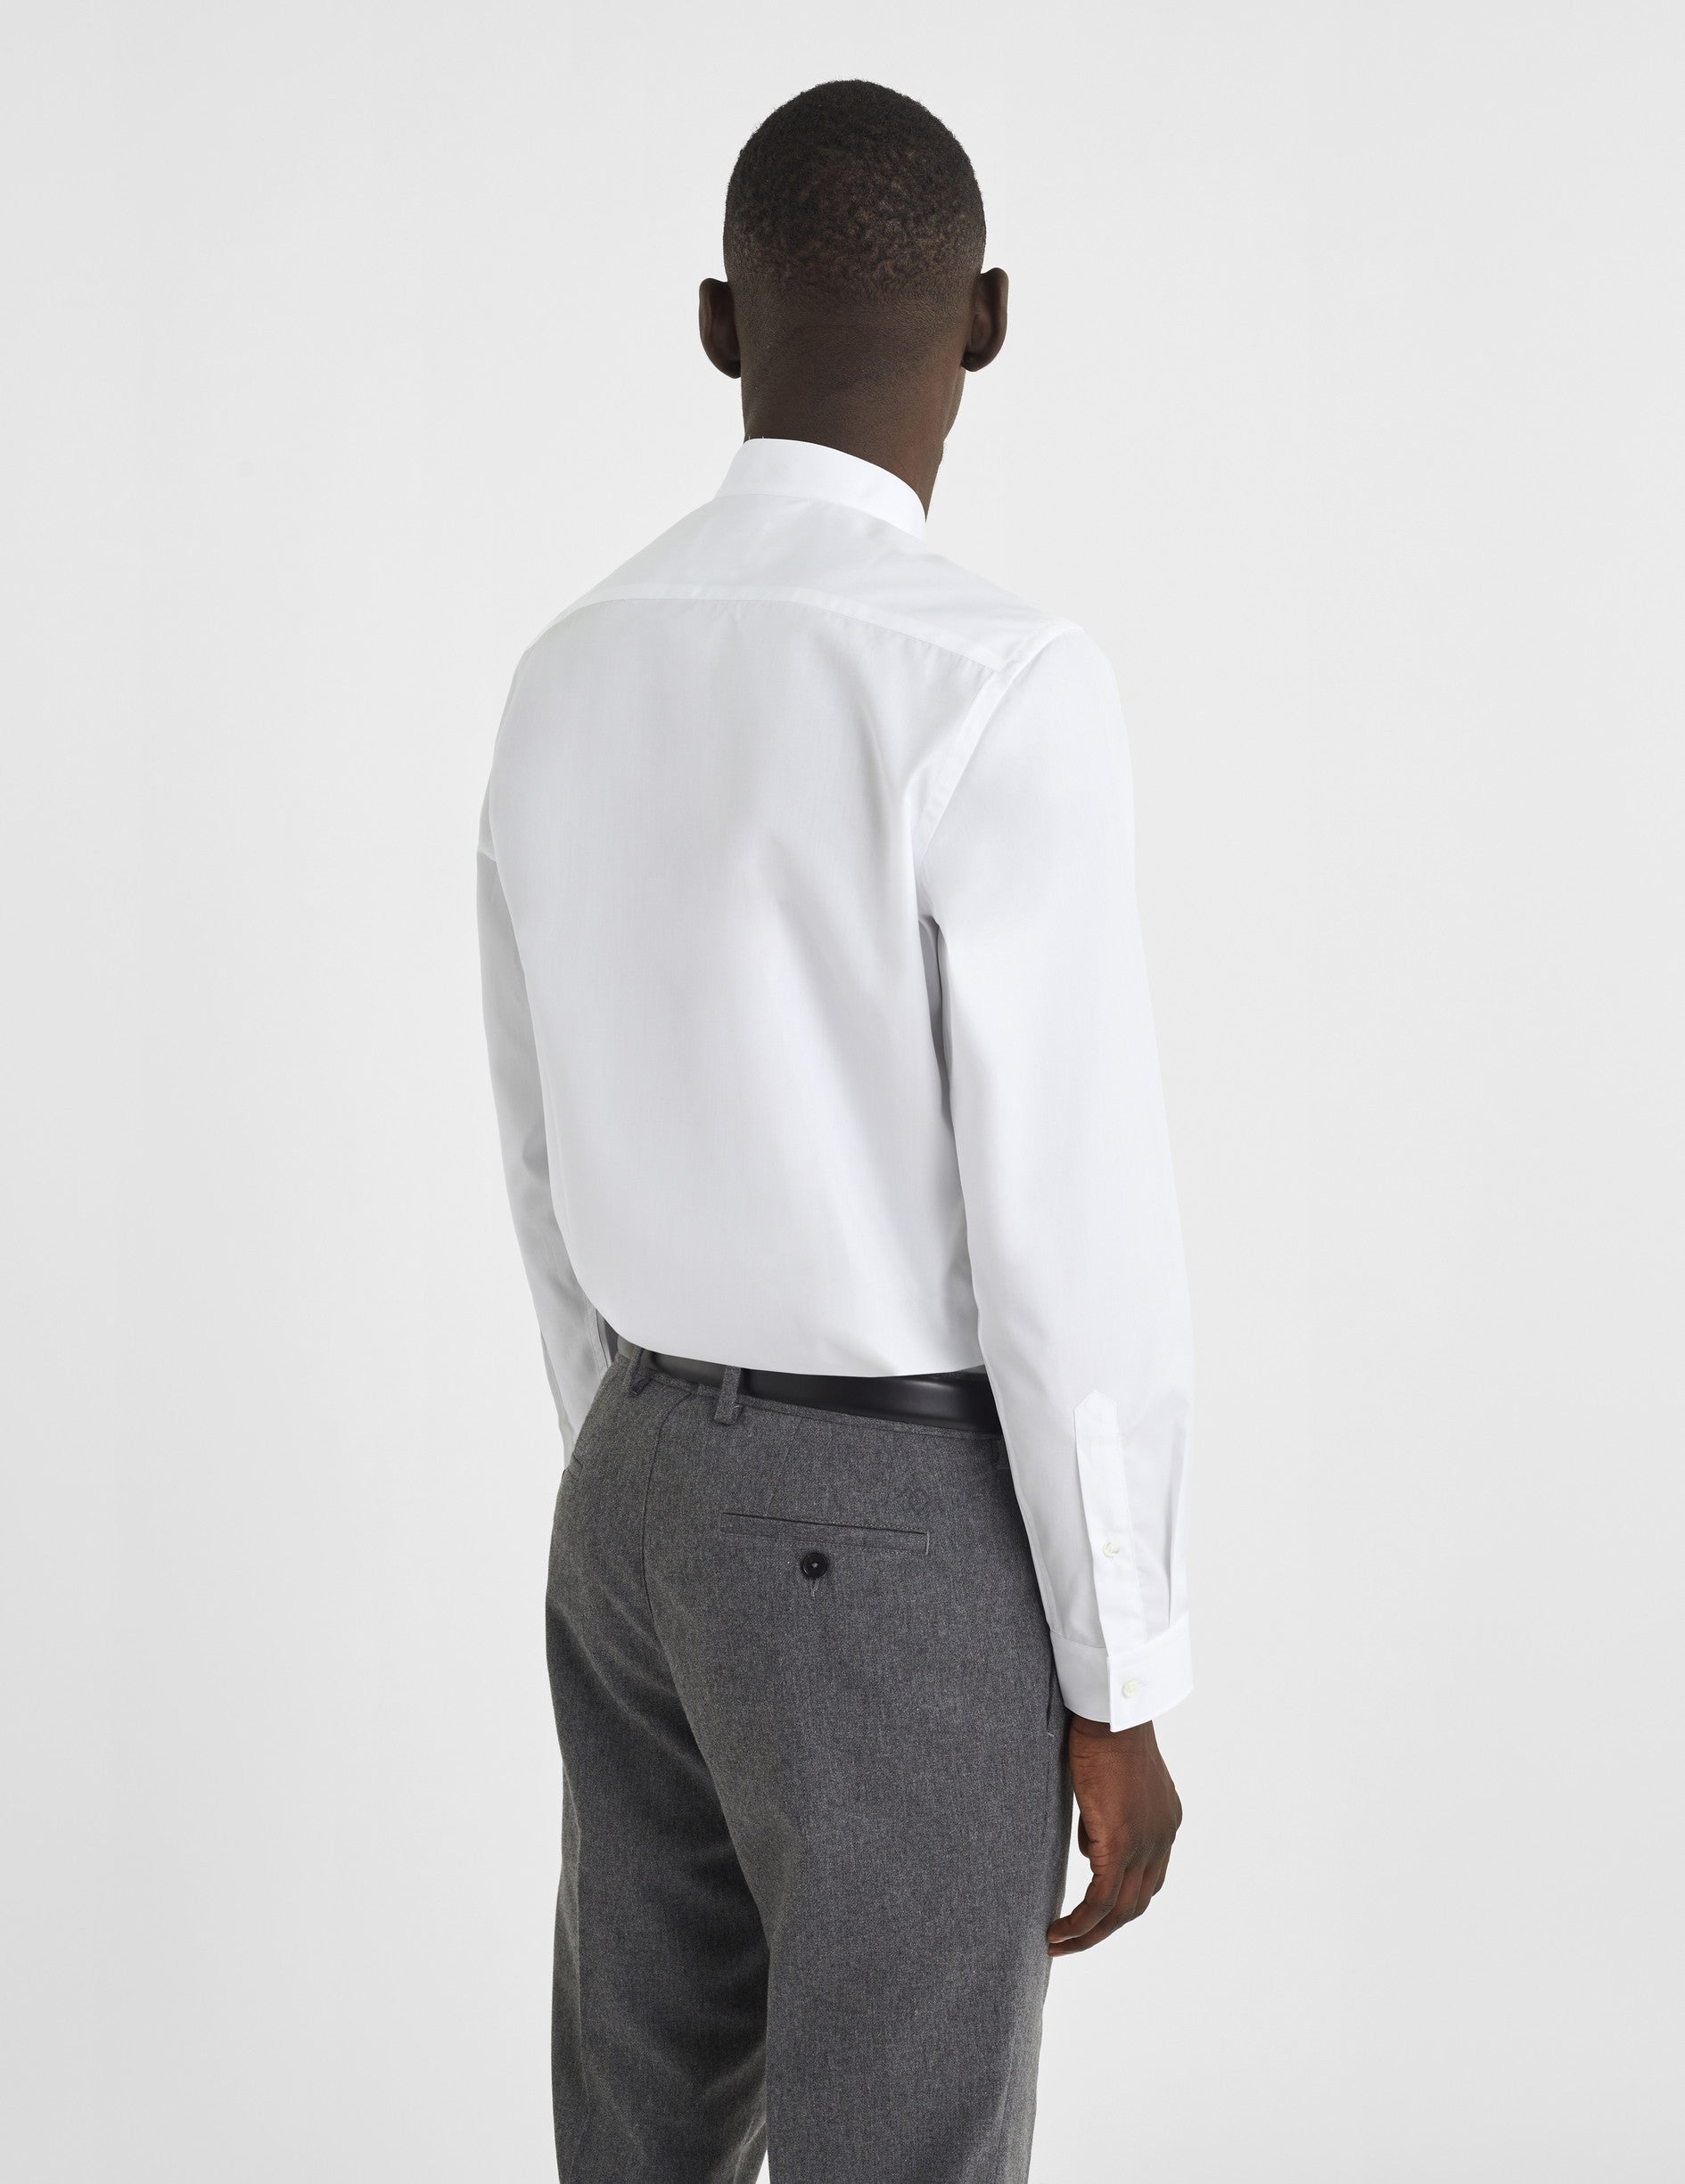 Semi-fitted white shirt - Poplin - Straight Collar